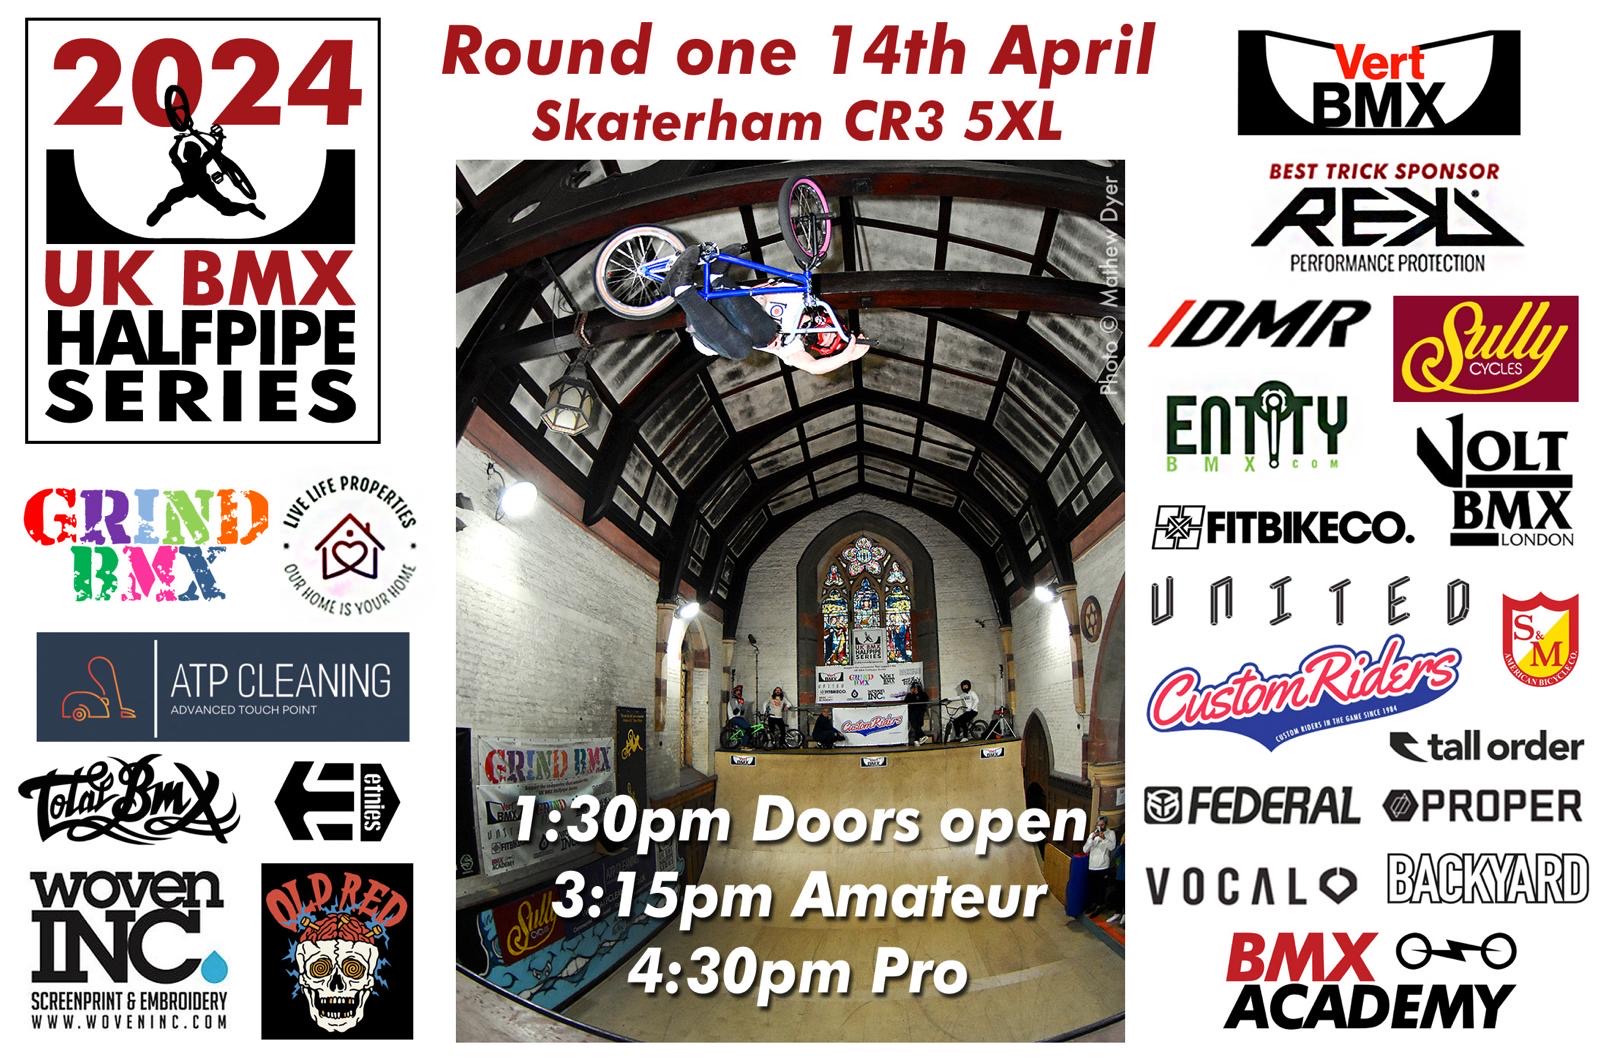 UK BMX Halfpipe Series Round 1